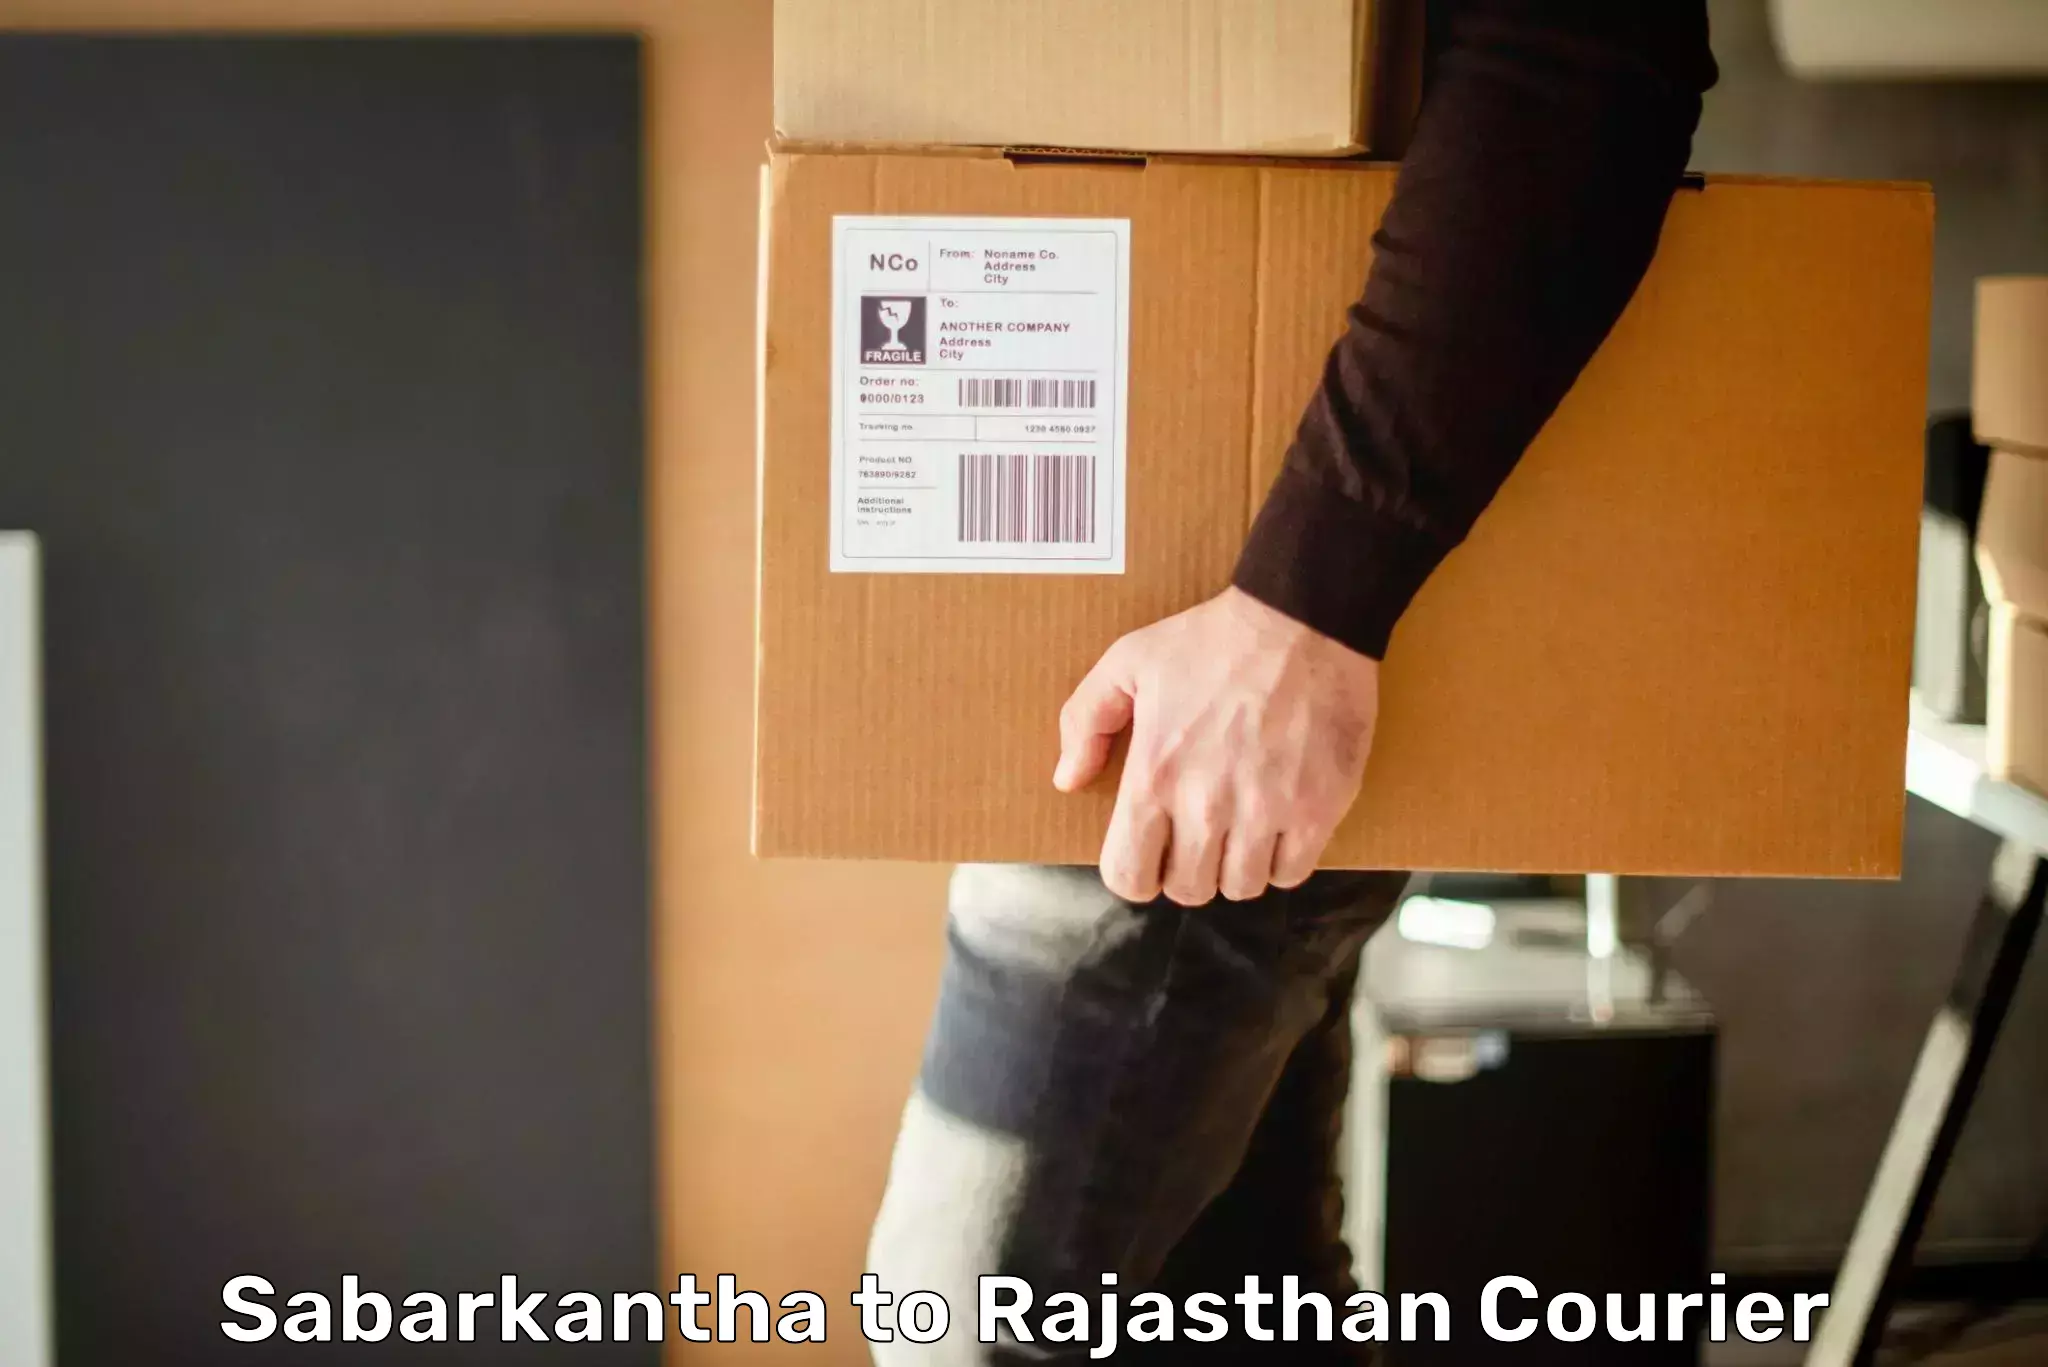 Global logistics network Sabarkantha to Rajasthan